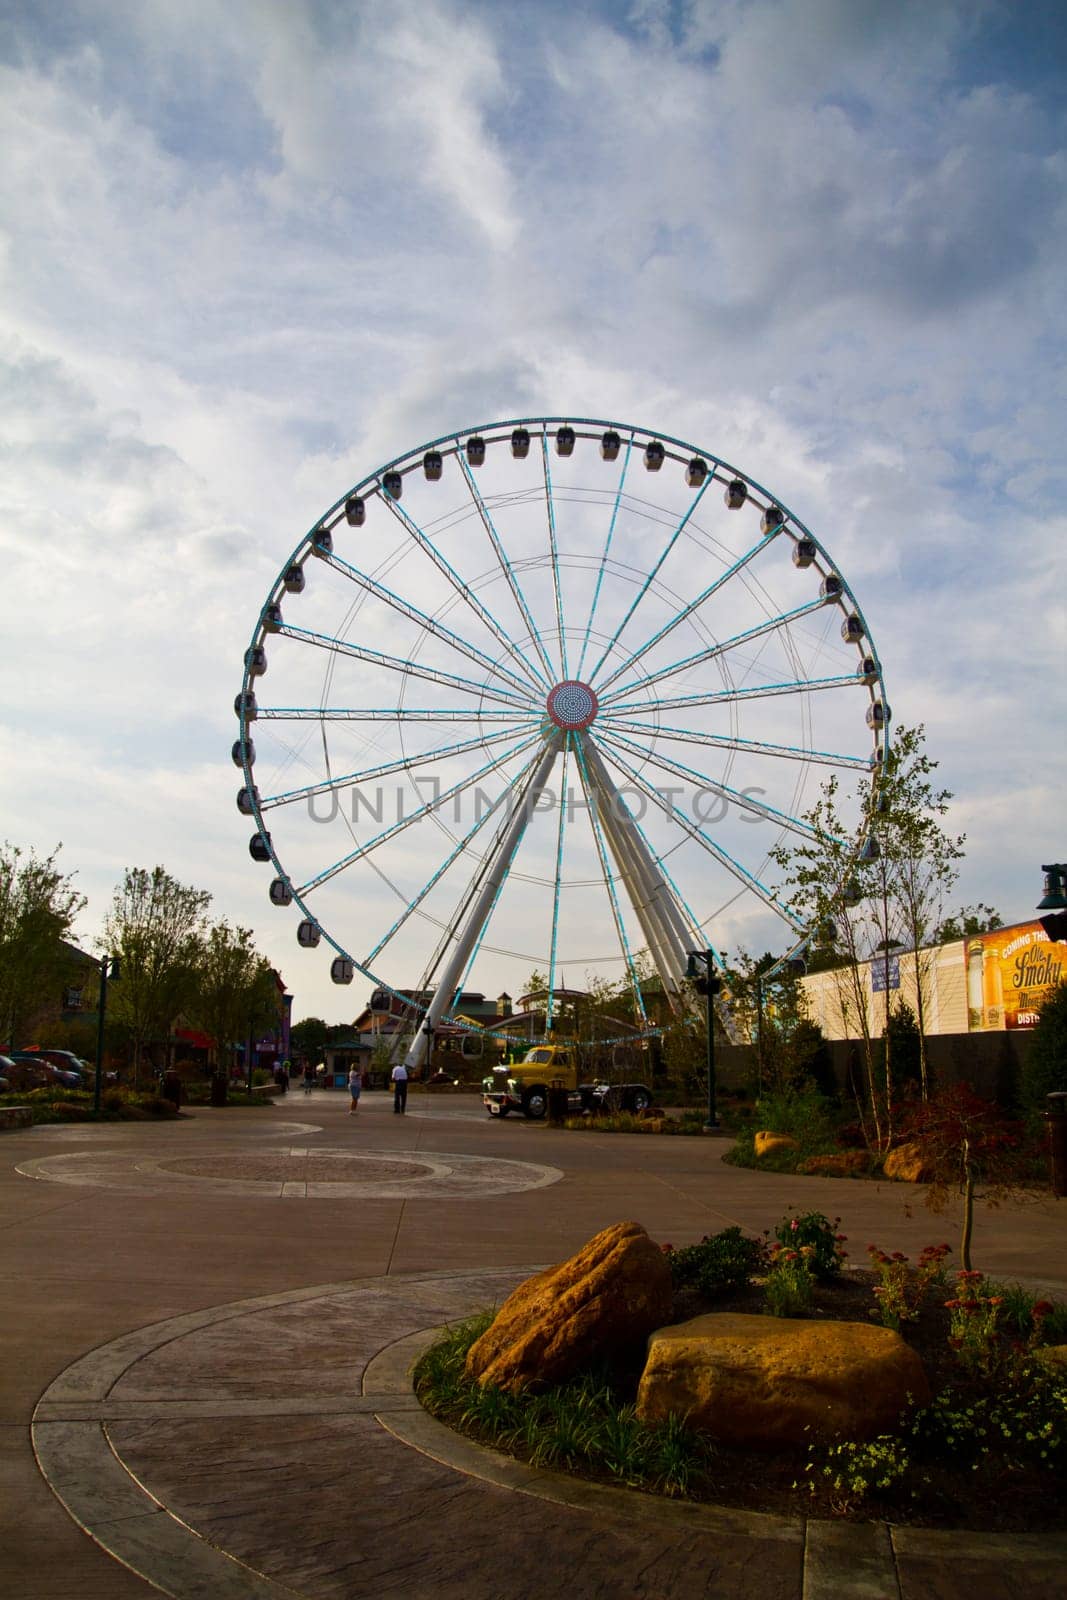 Grand Ferris Wheel Dominating Skyline at Leisure Park in Gatlinburg, Tennessee by njproductions